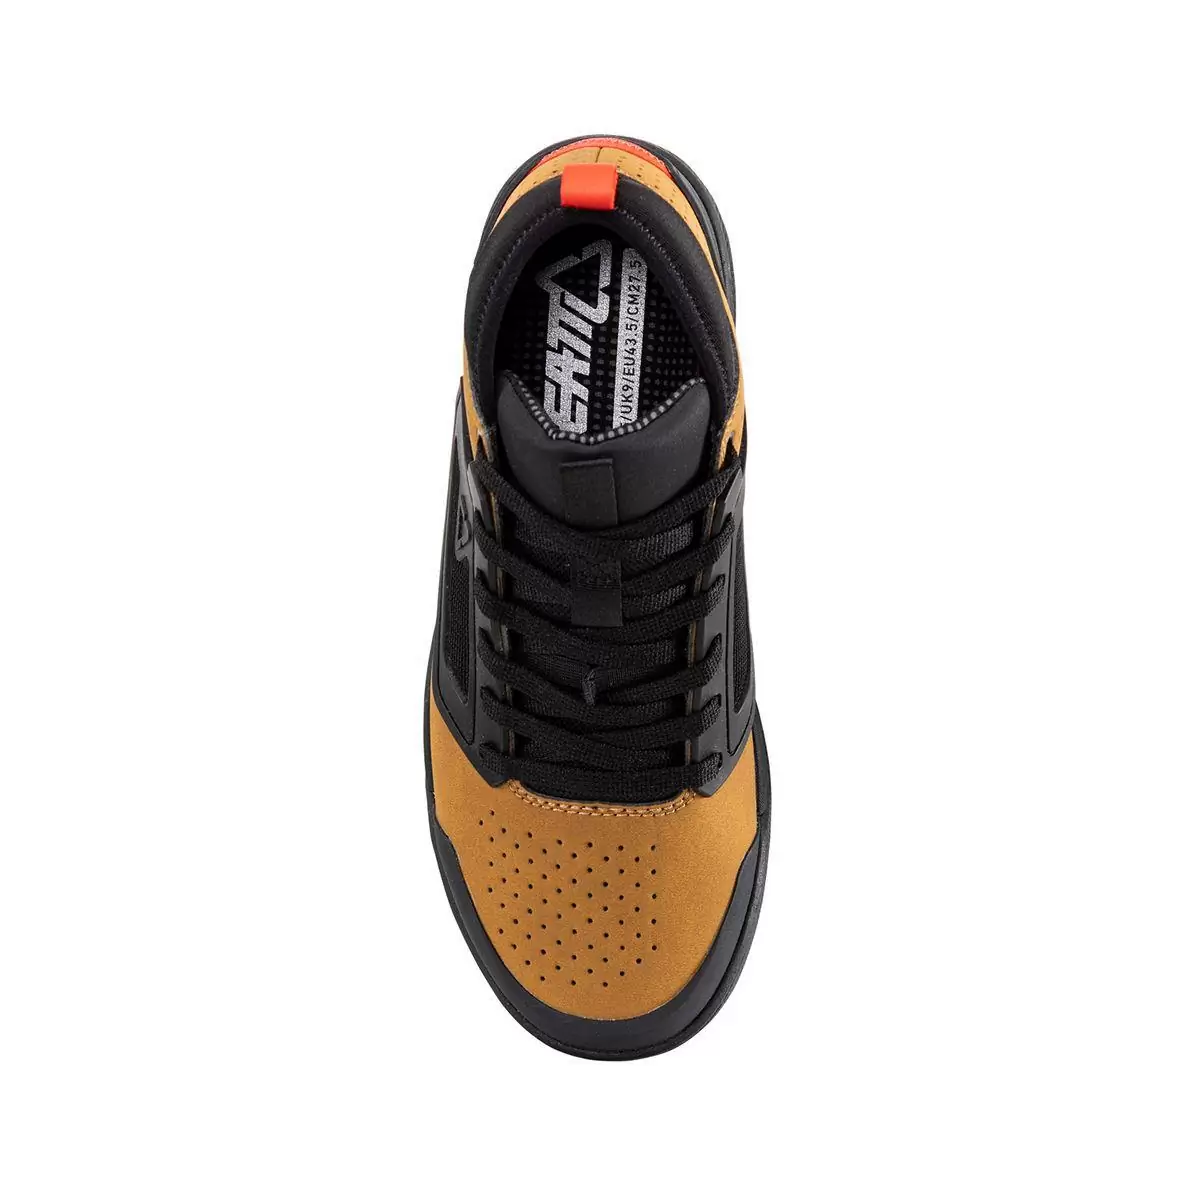 MTB Flat 3.0 Shoes Brown/Black Size 44.5 #3